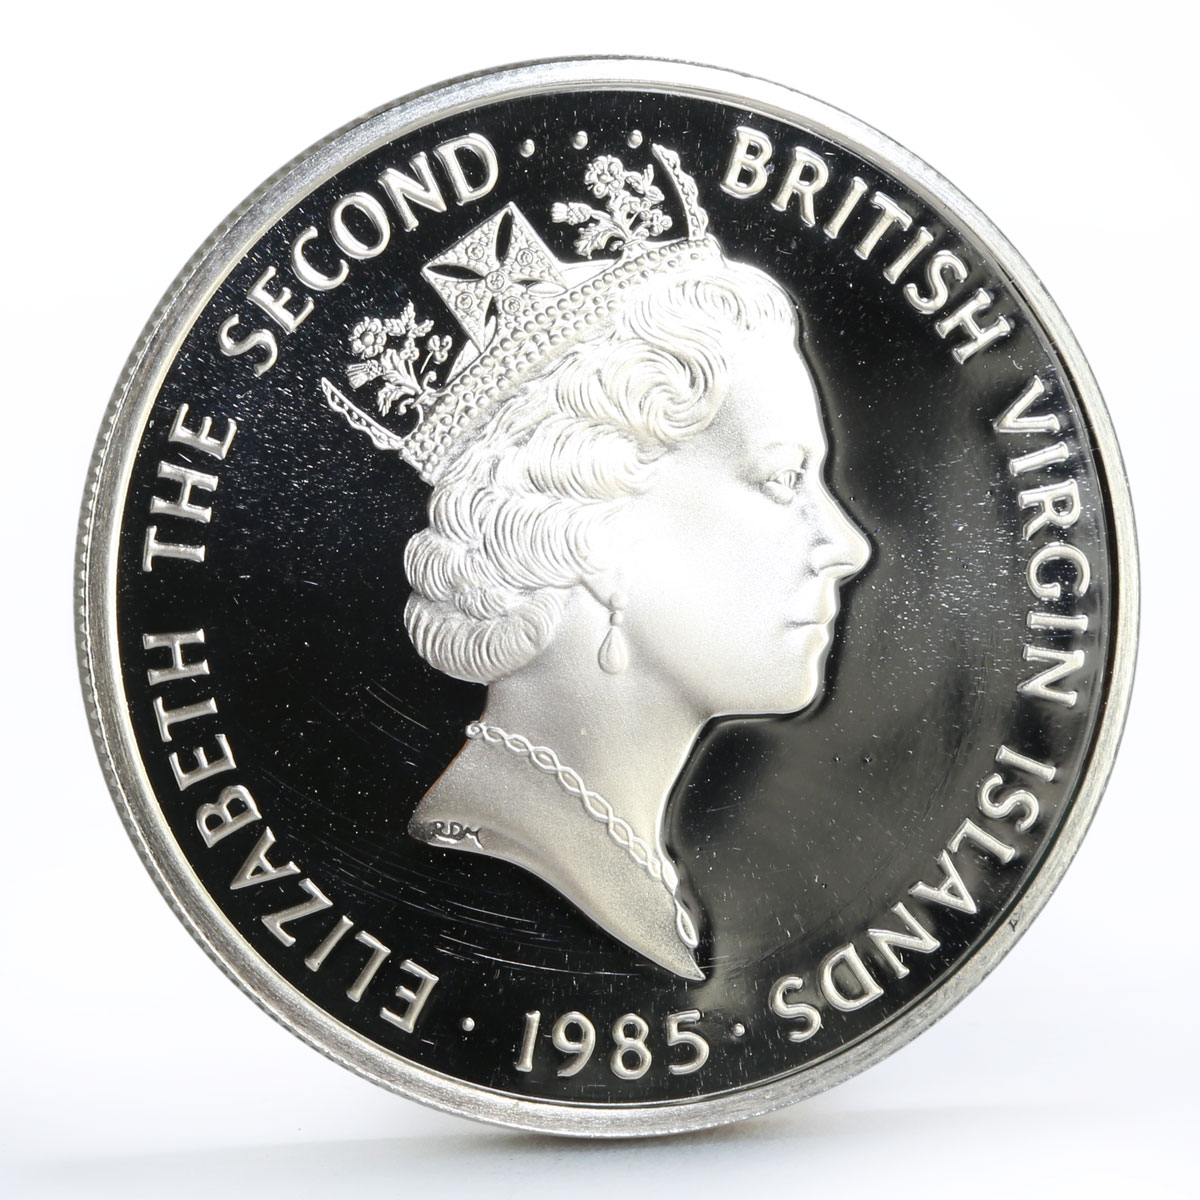 British Virgin Islands 20 dollars Caribbean Treasures Gold Bar silver coin 1985